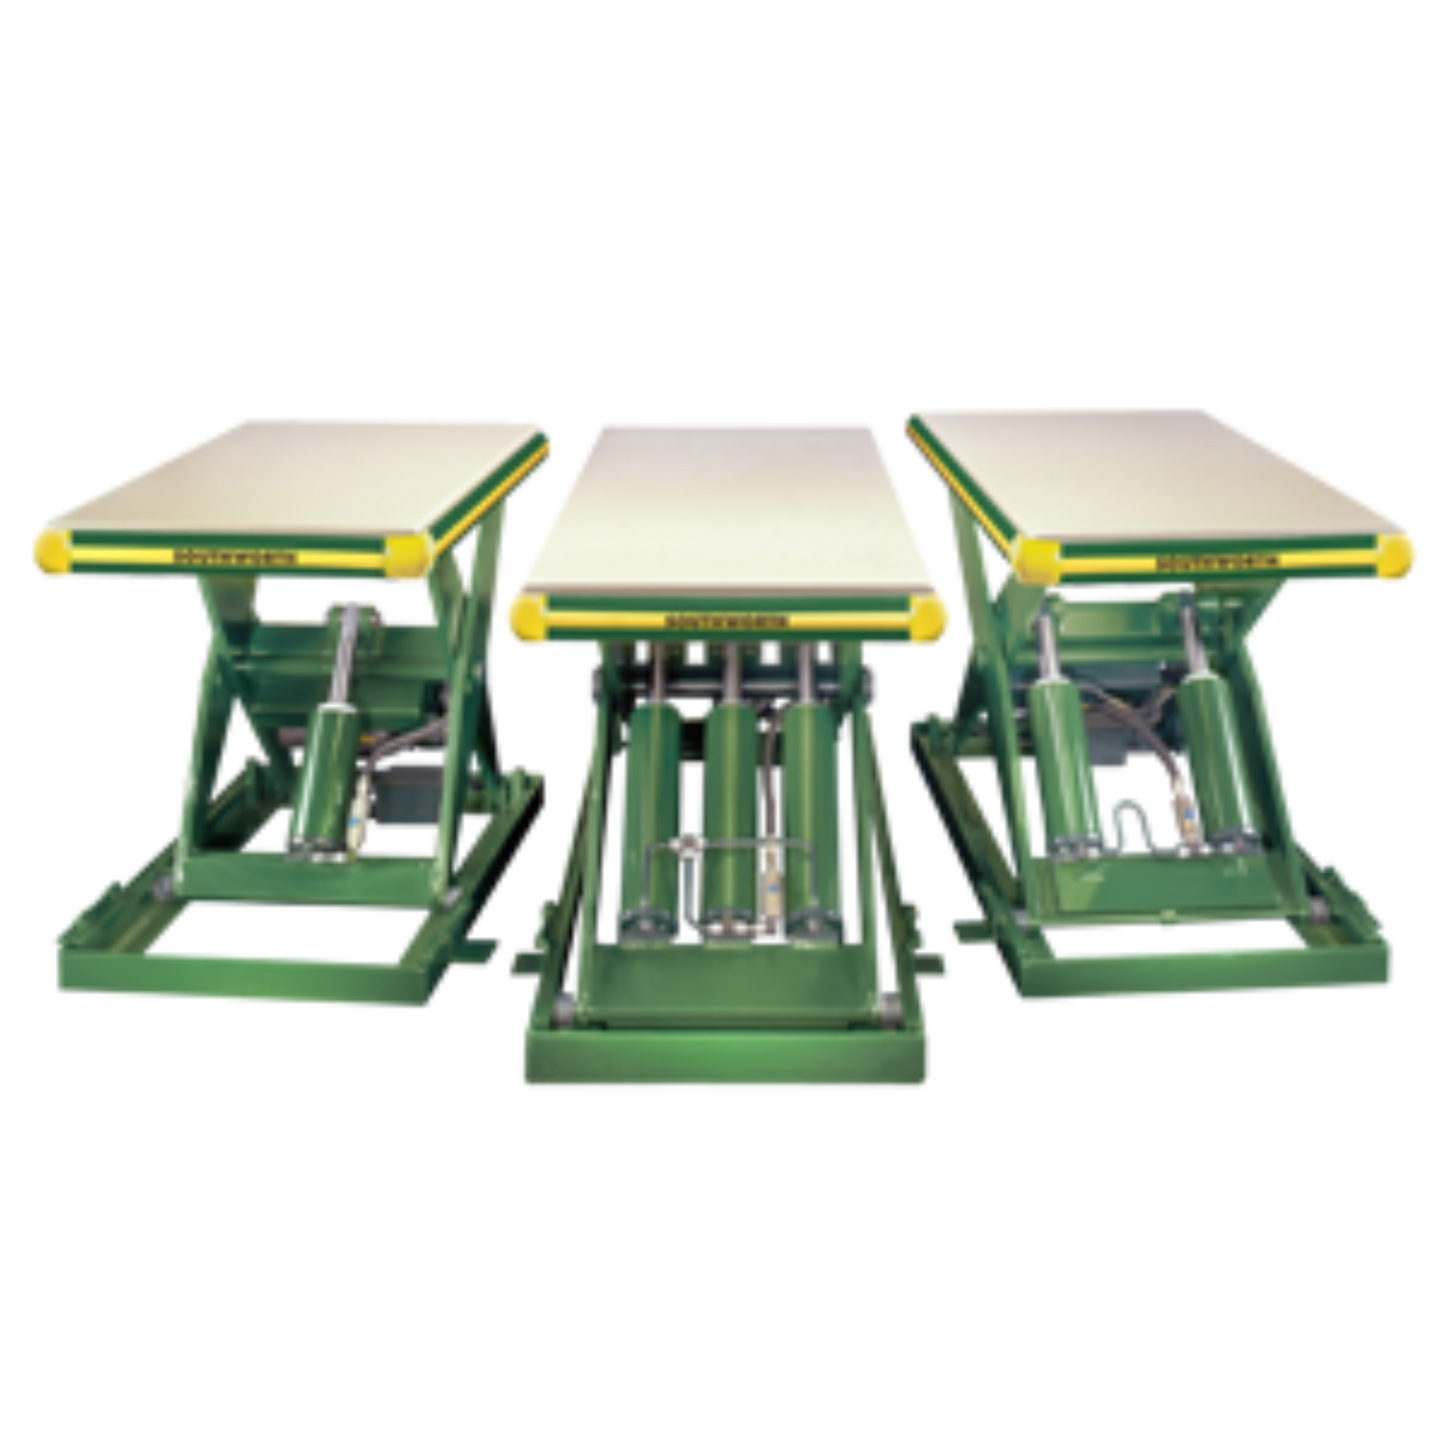 Backsaver Hydraulic Lift Table LS2-36